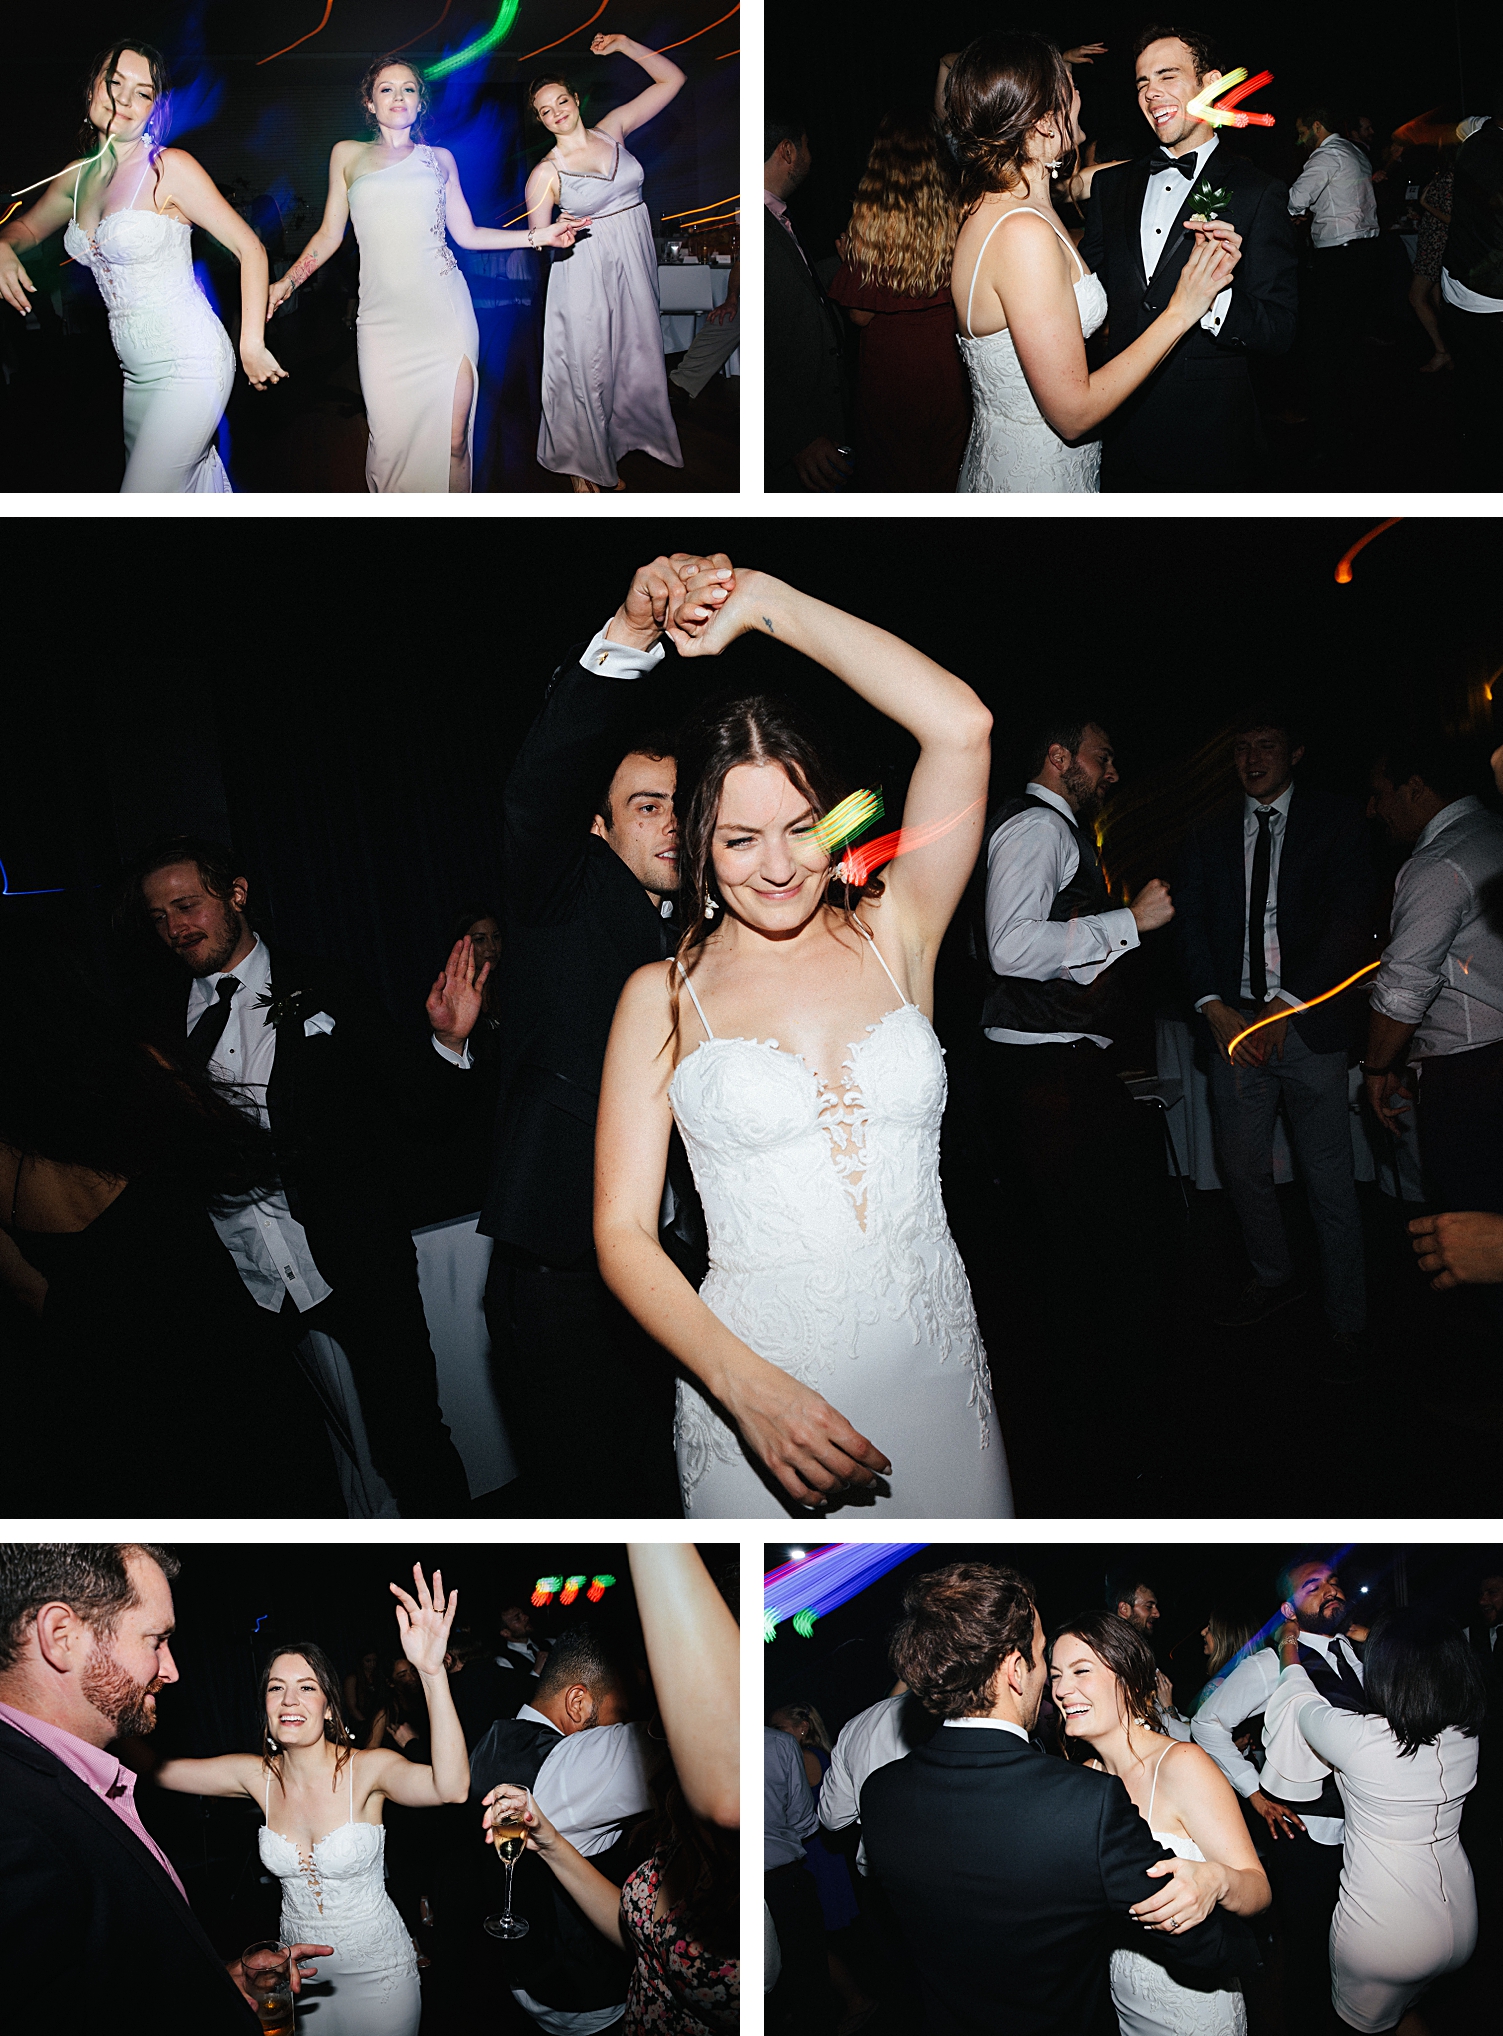 austin hotel wedding reception dancing bride and groom spin